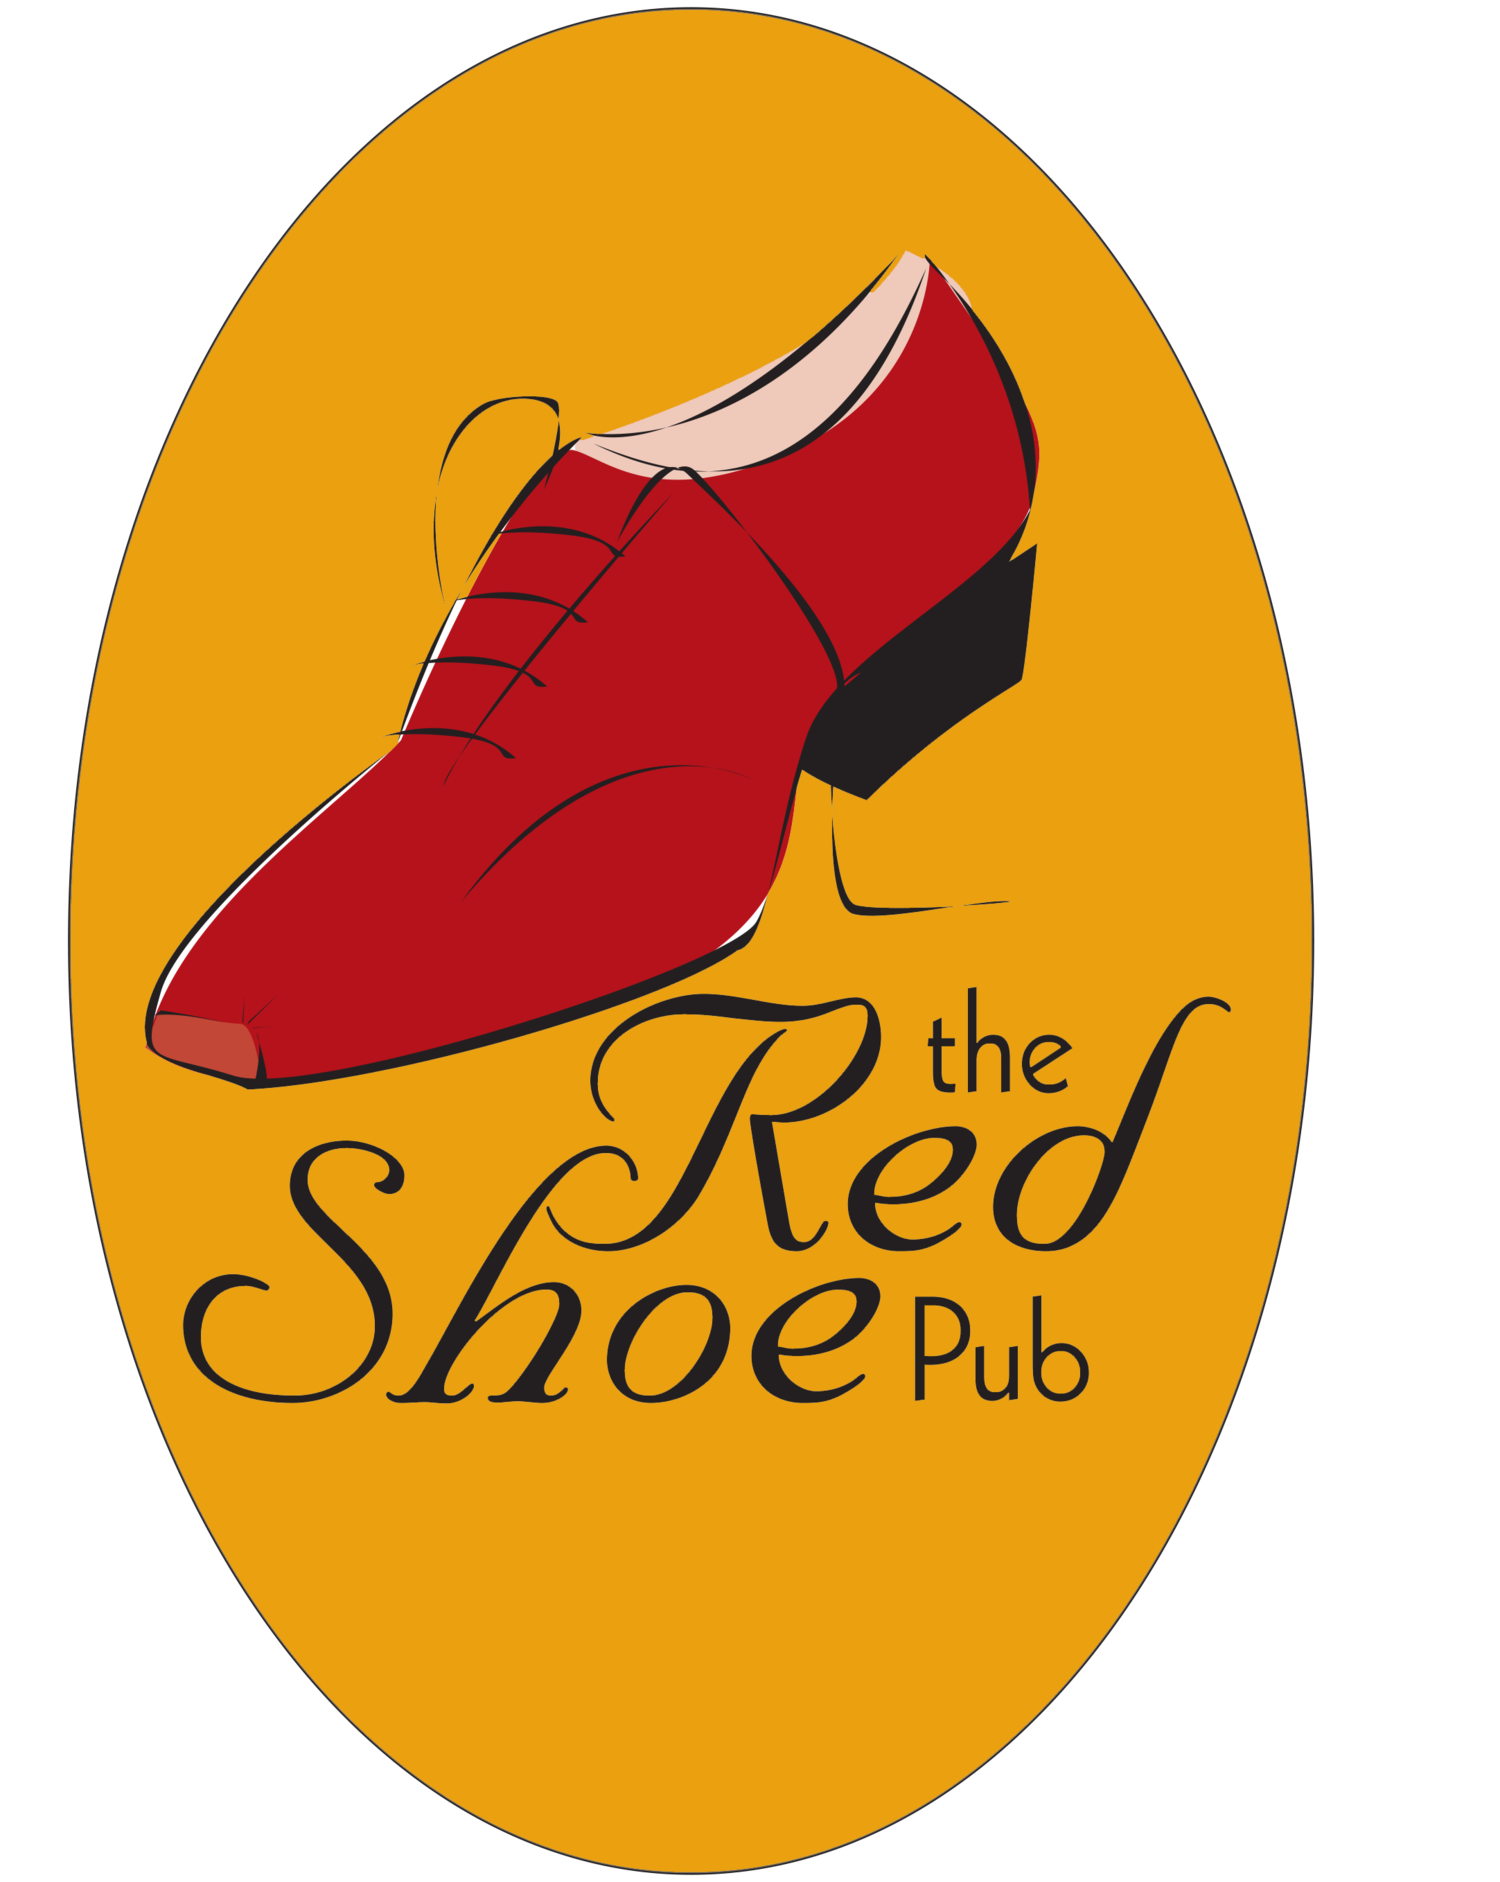 Red shoe pub crewgallerynewscontact. News clipart news crew